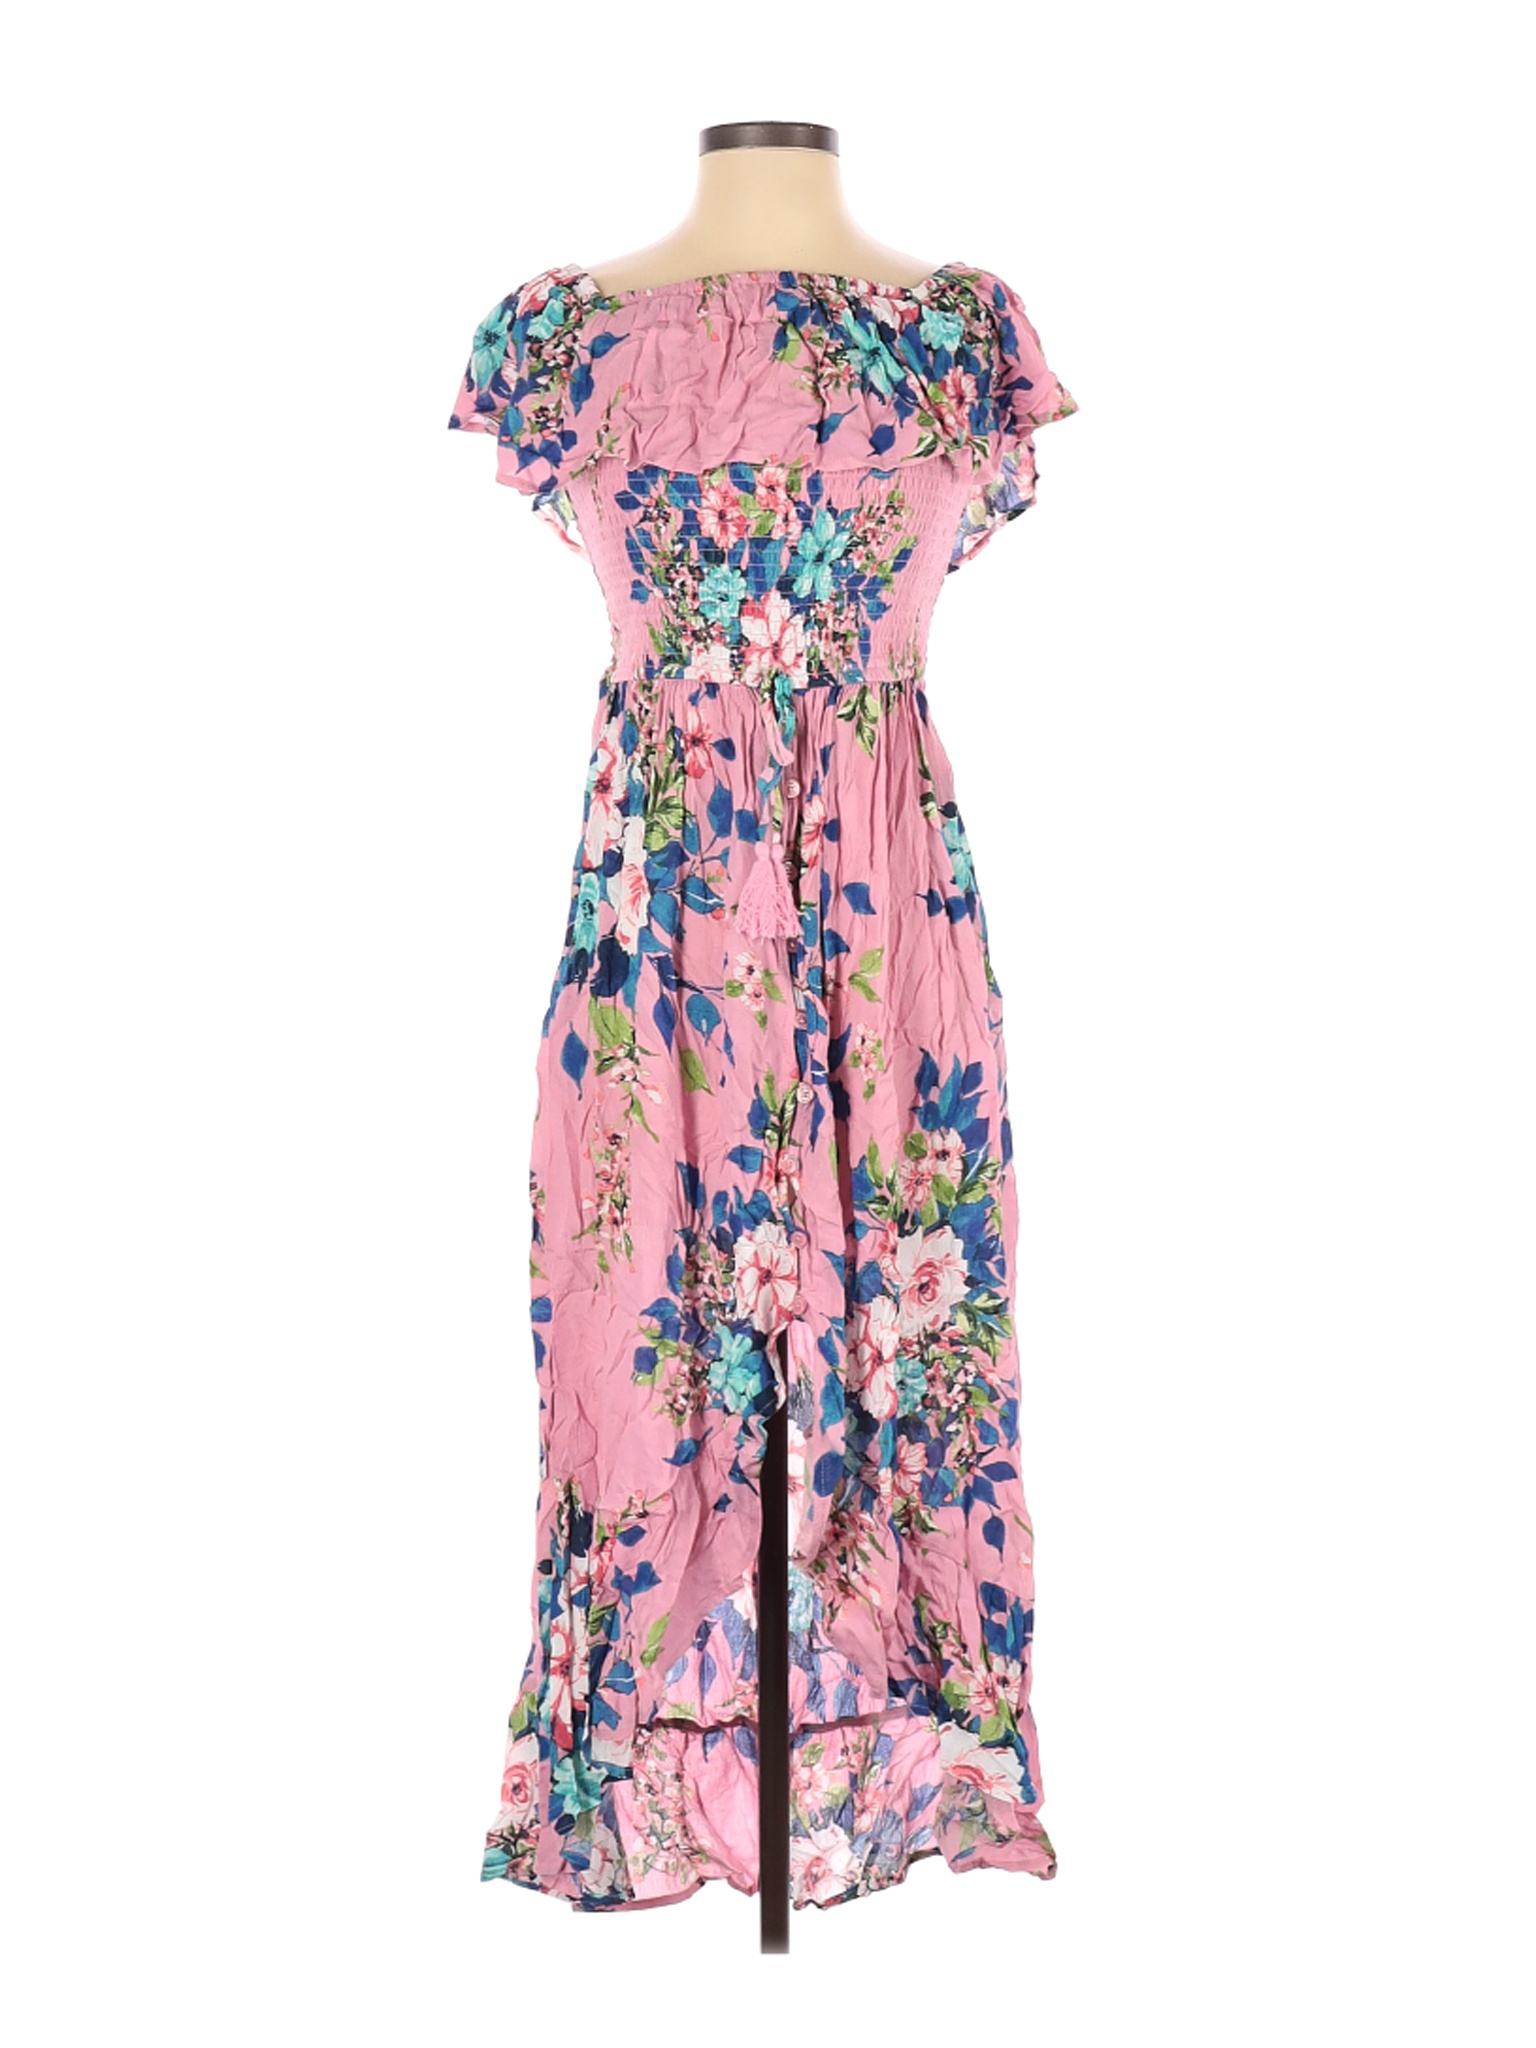 NWT Xhilaration Women Pink Casual Dress S | eBay